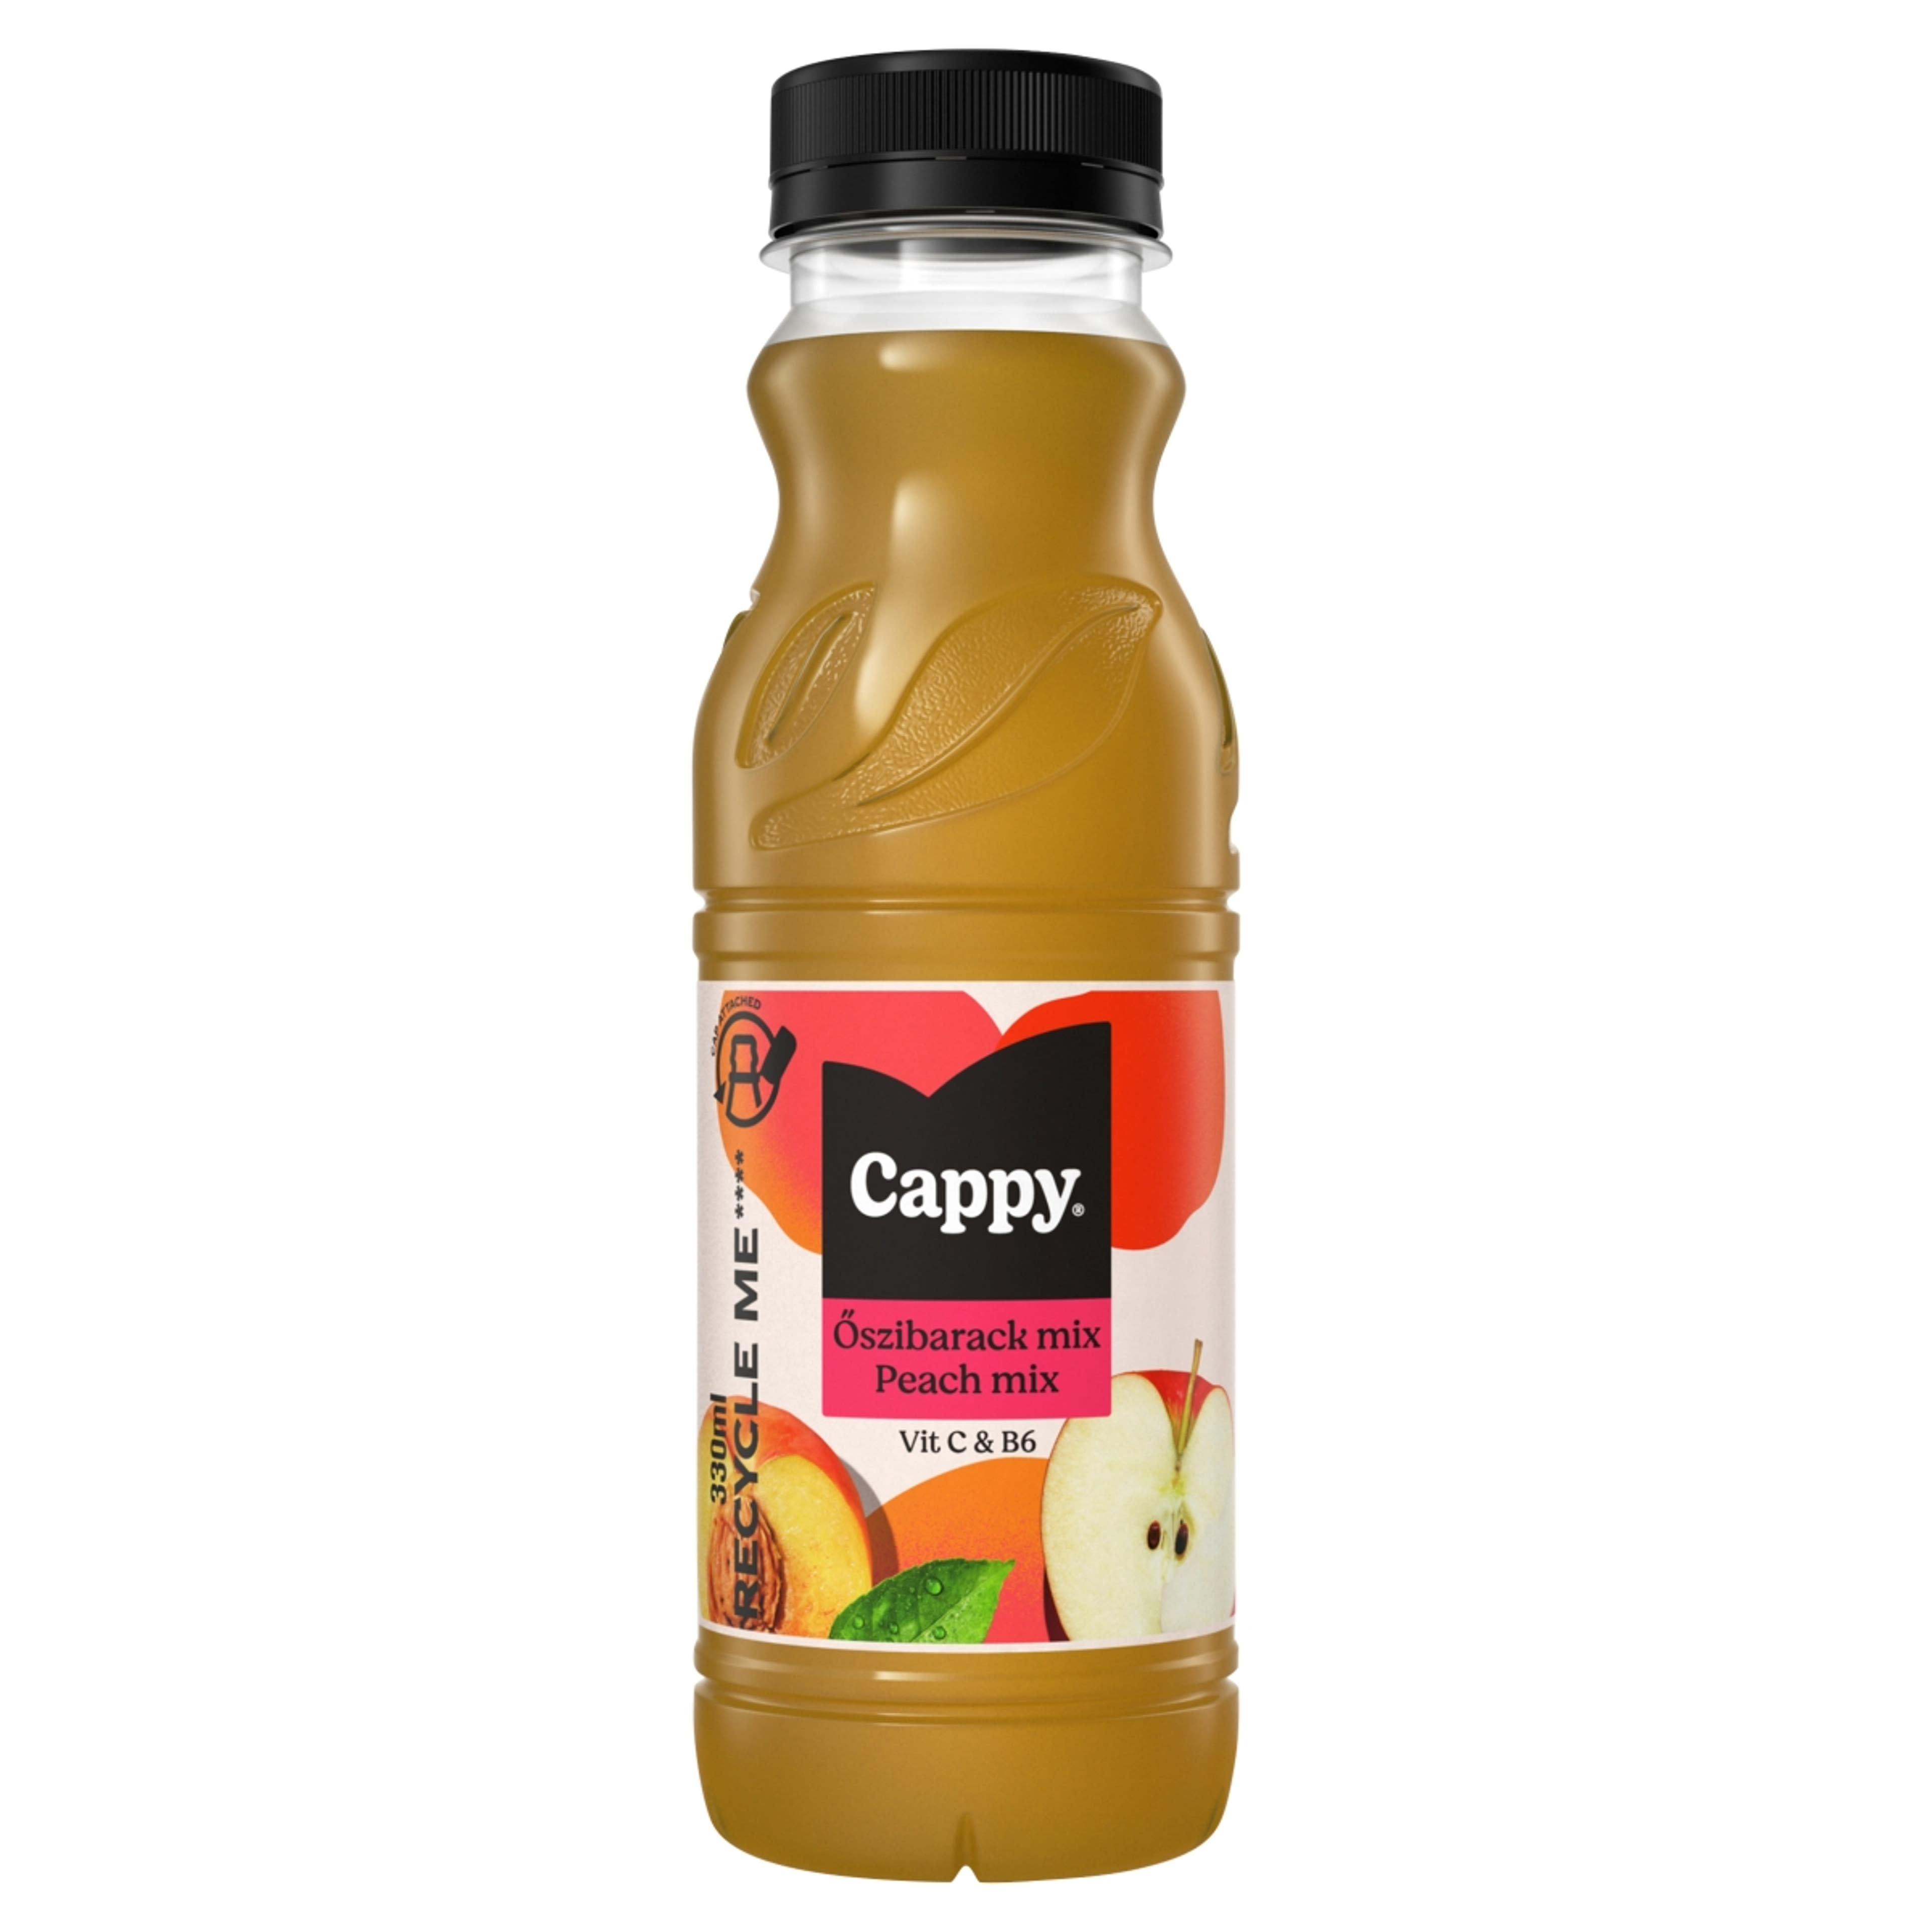 Cappy barack 46% - 330 ml-1